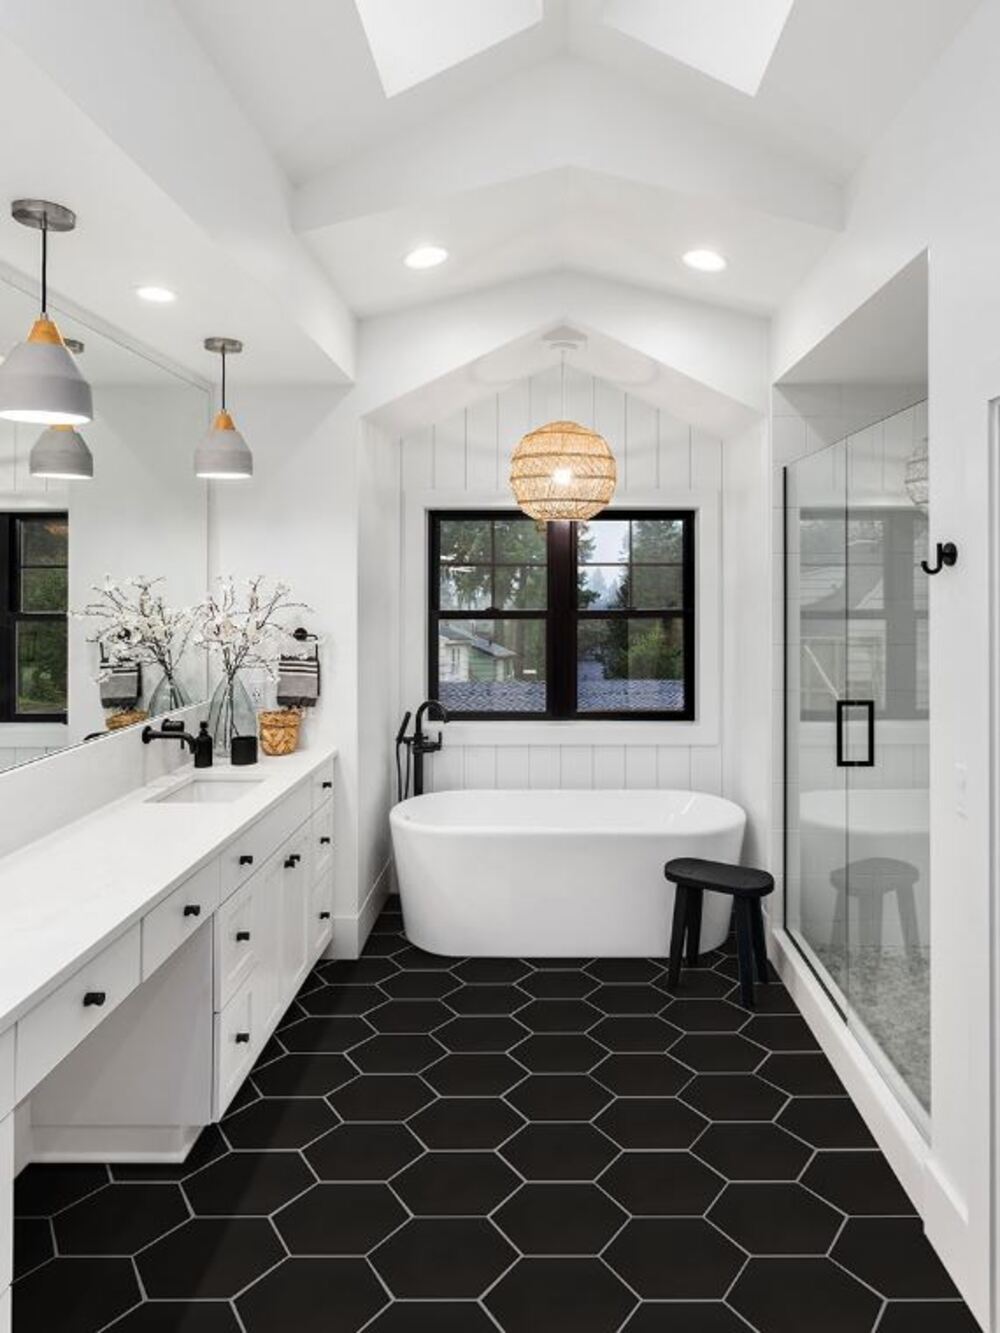 9 in. Hexagon Black Satin Porcelain Floor and Wall Tile (6.89 sq. ft. - 14 Pieces/Case) for Kitchen Backsplash, Bathroom, Flooring